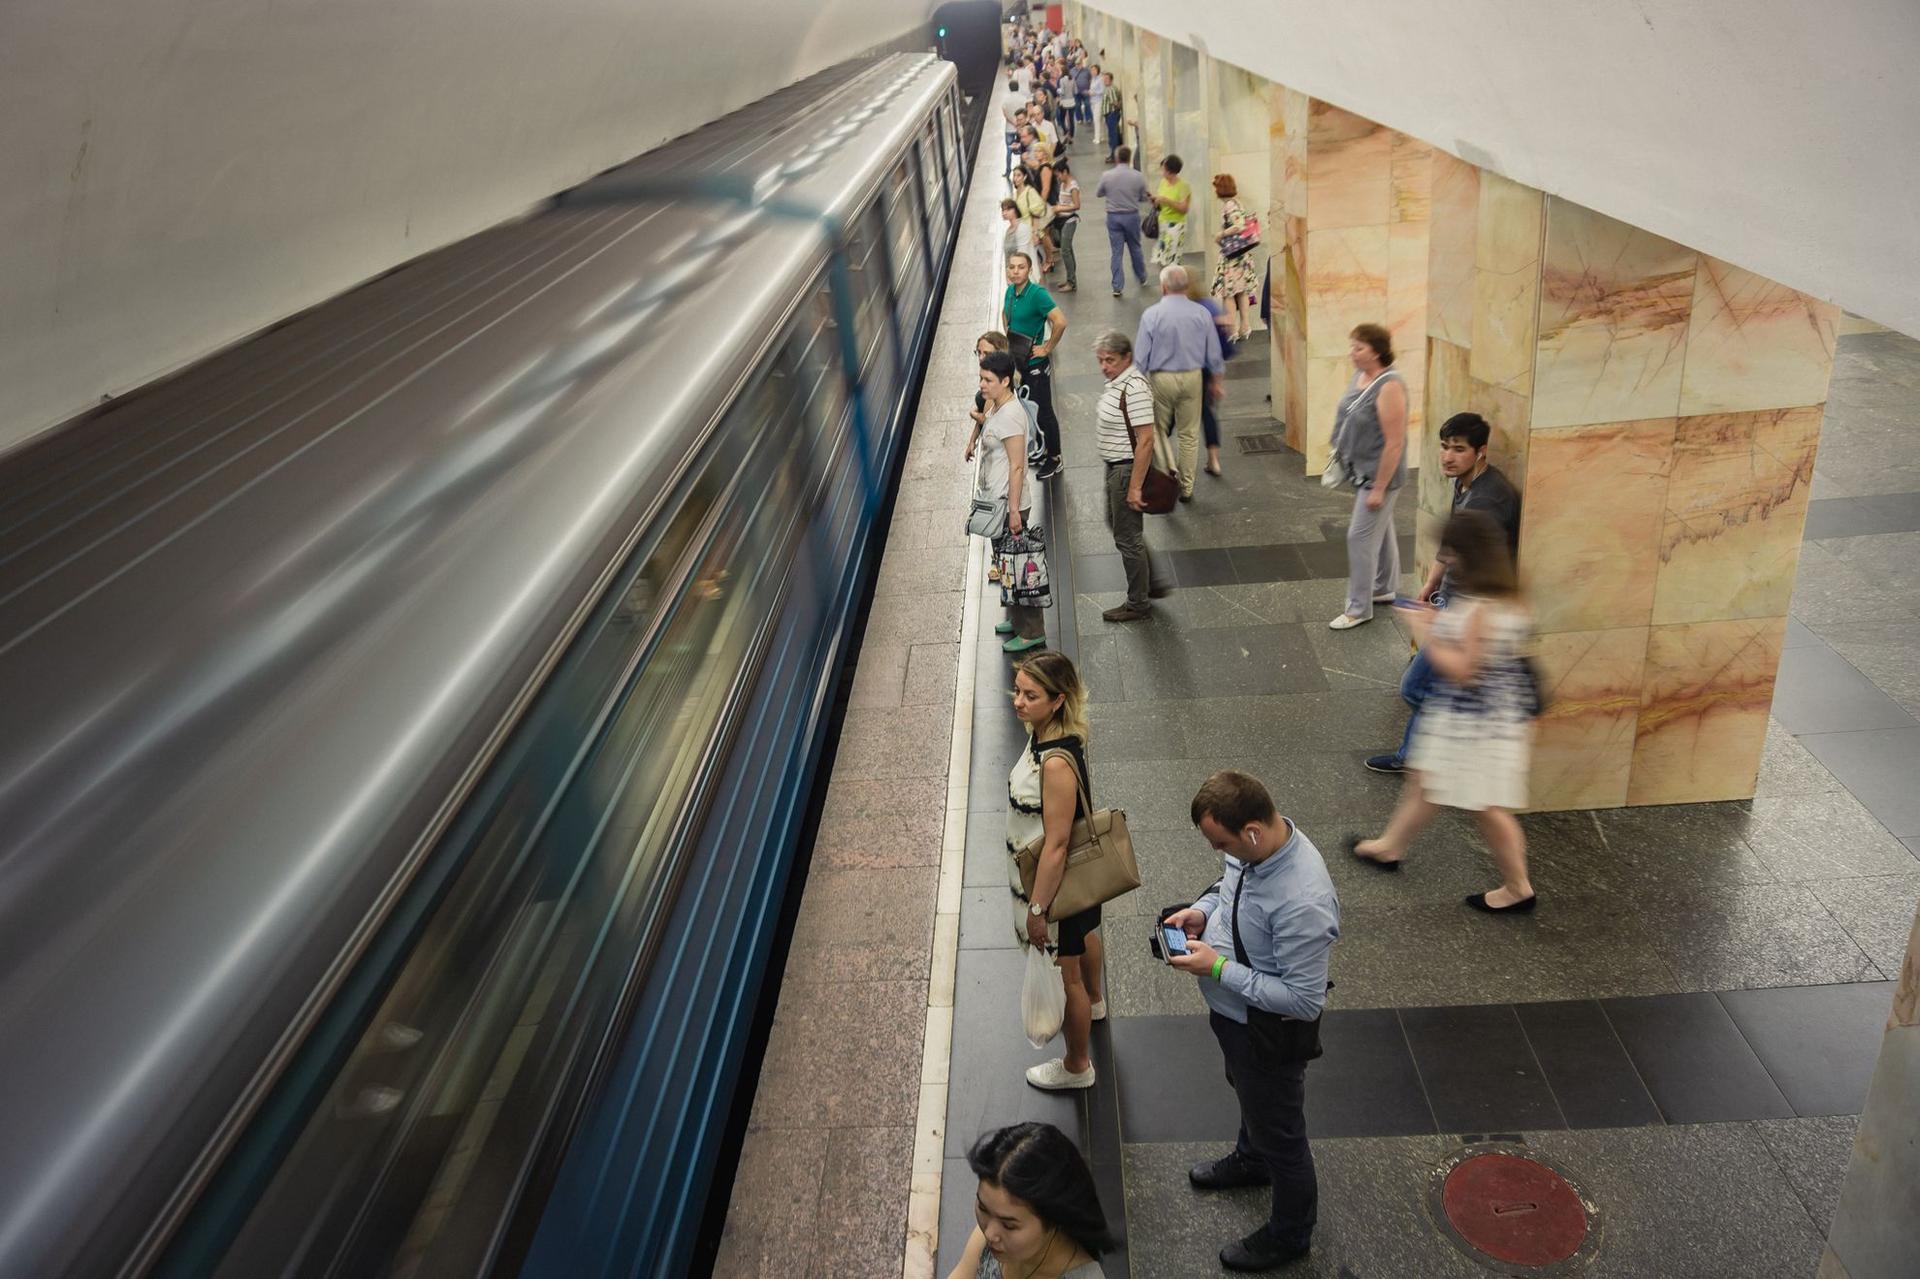 Metroul din Moscova în vremuri pre-pandemice. Foto: Ioana Epure